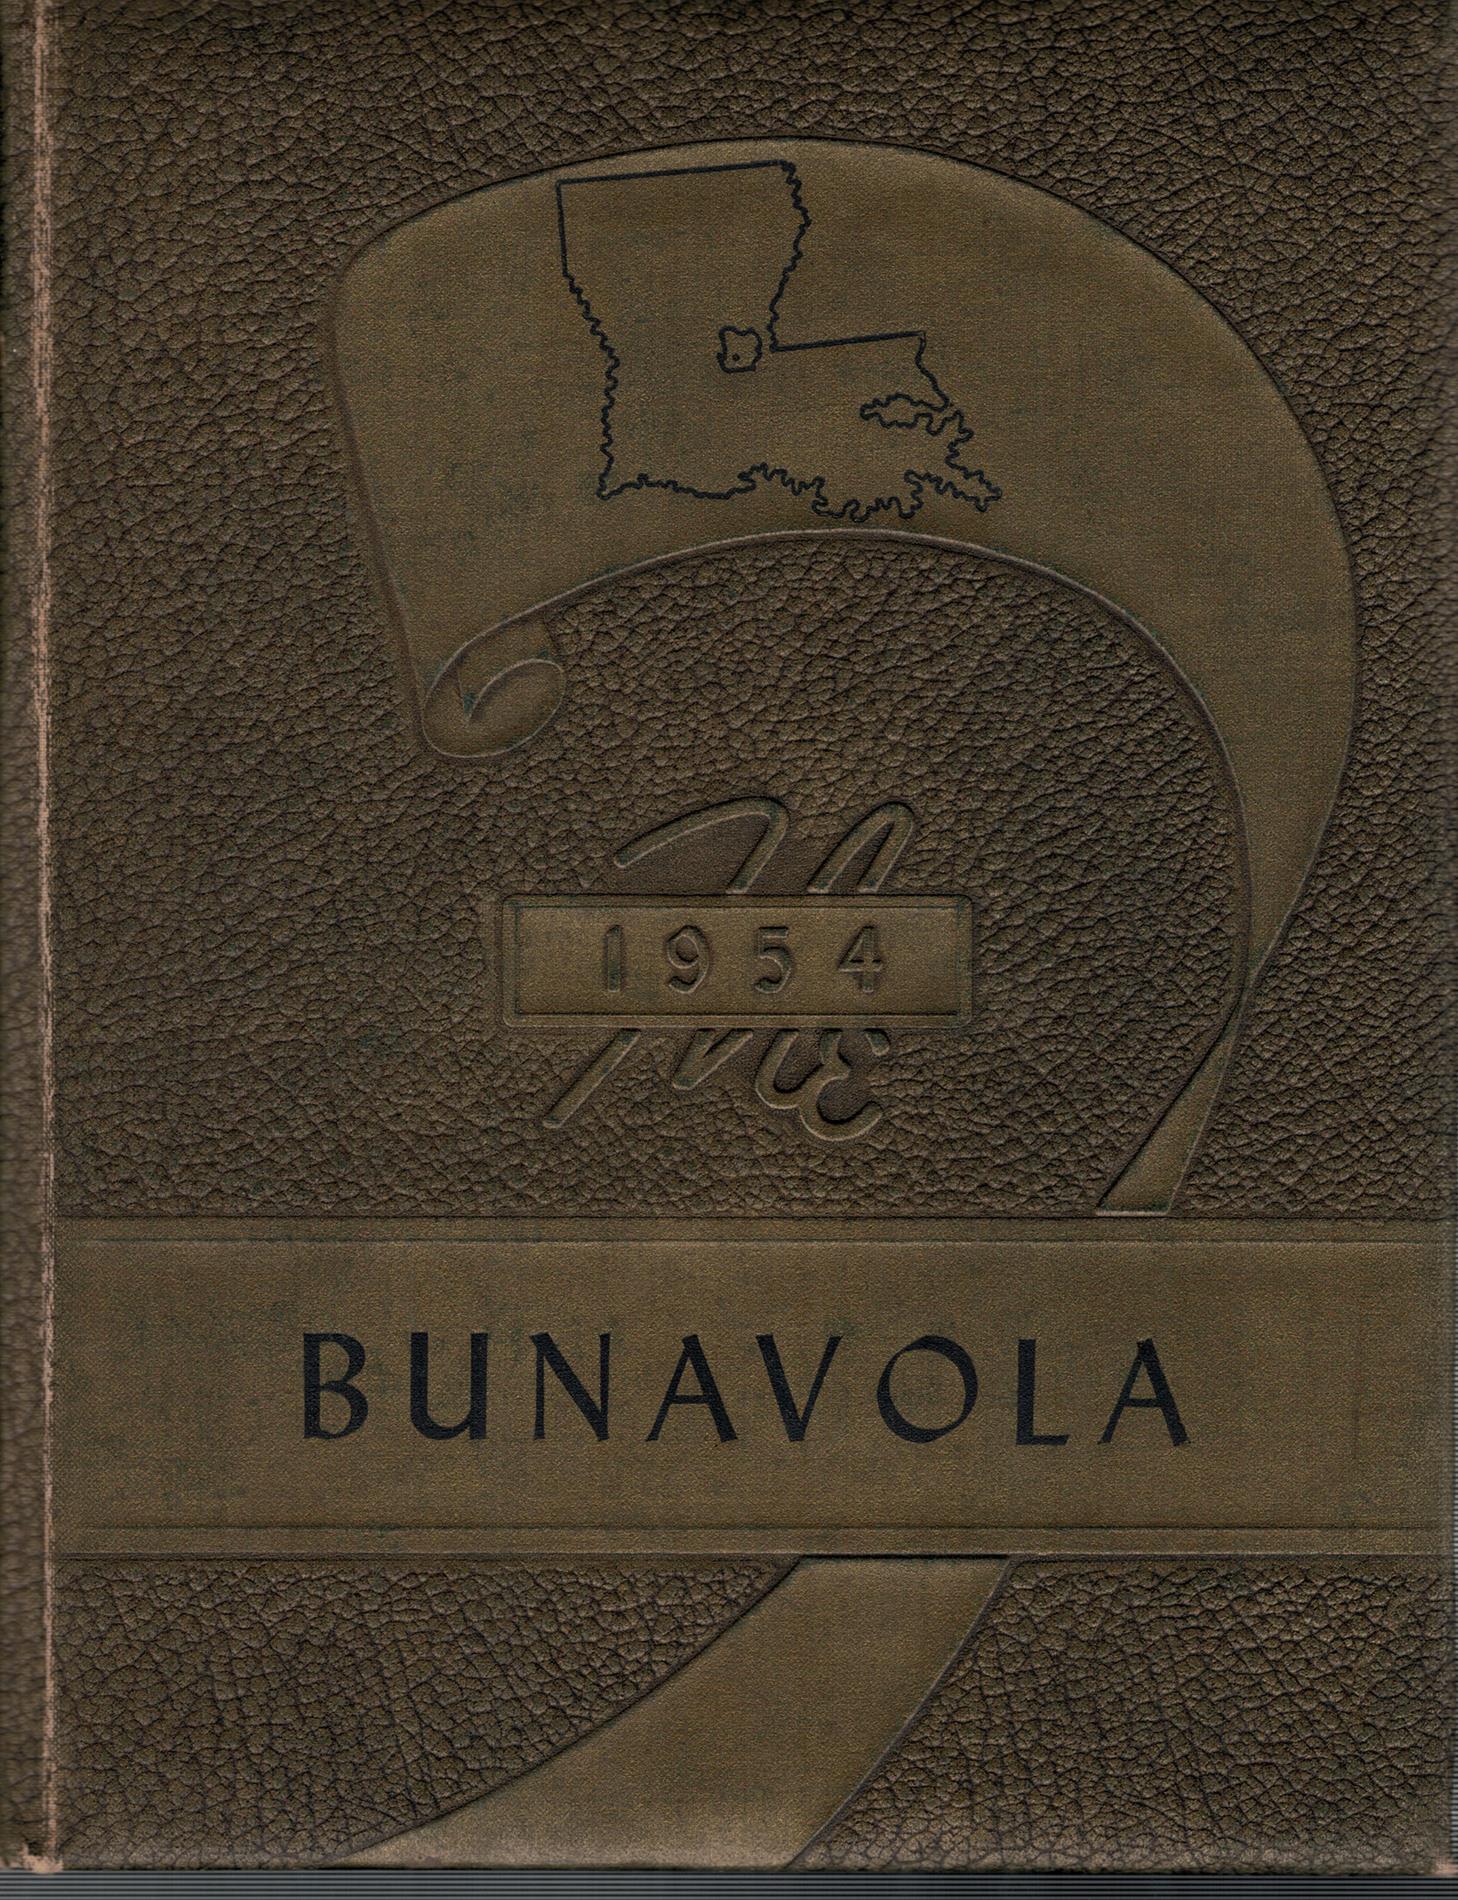 1954 Bunavola